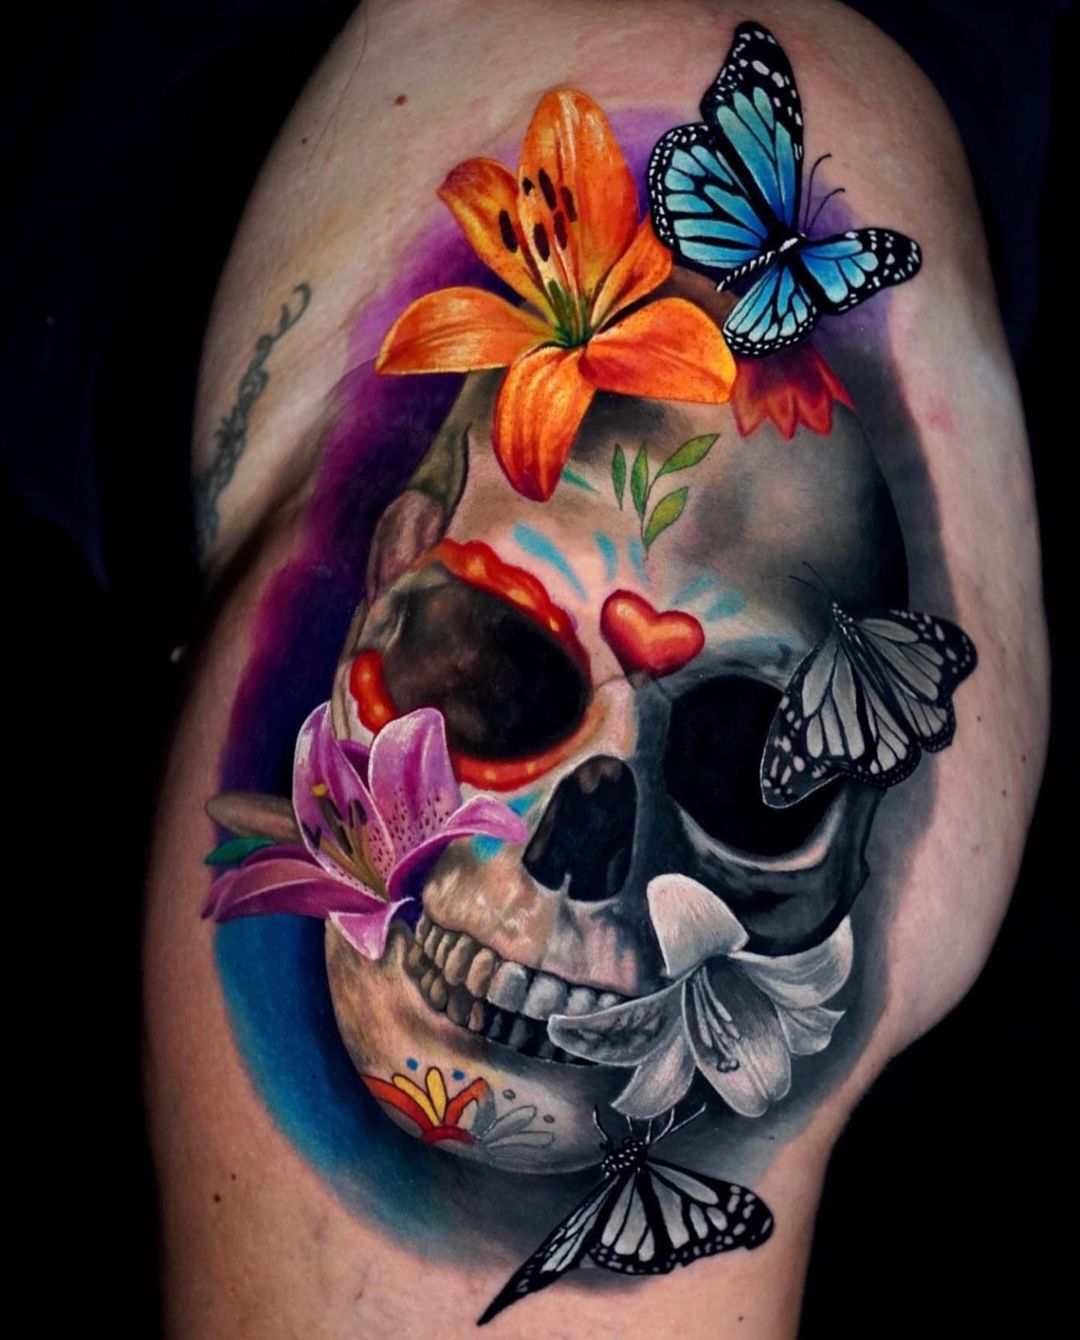 Birth Flowers & Over 50 Best Birthday Flower Tattoo Ideas - Tattoo Stylist